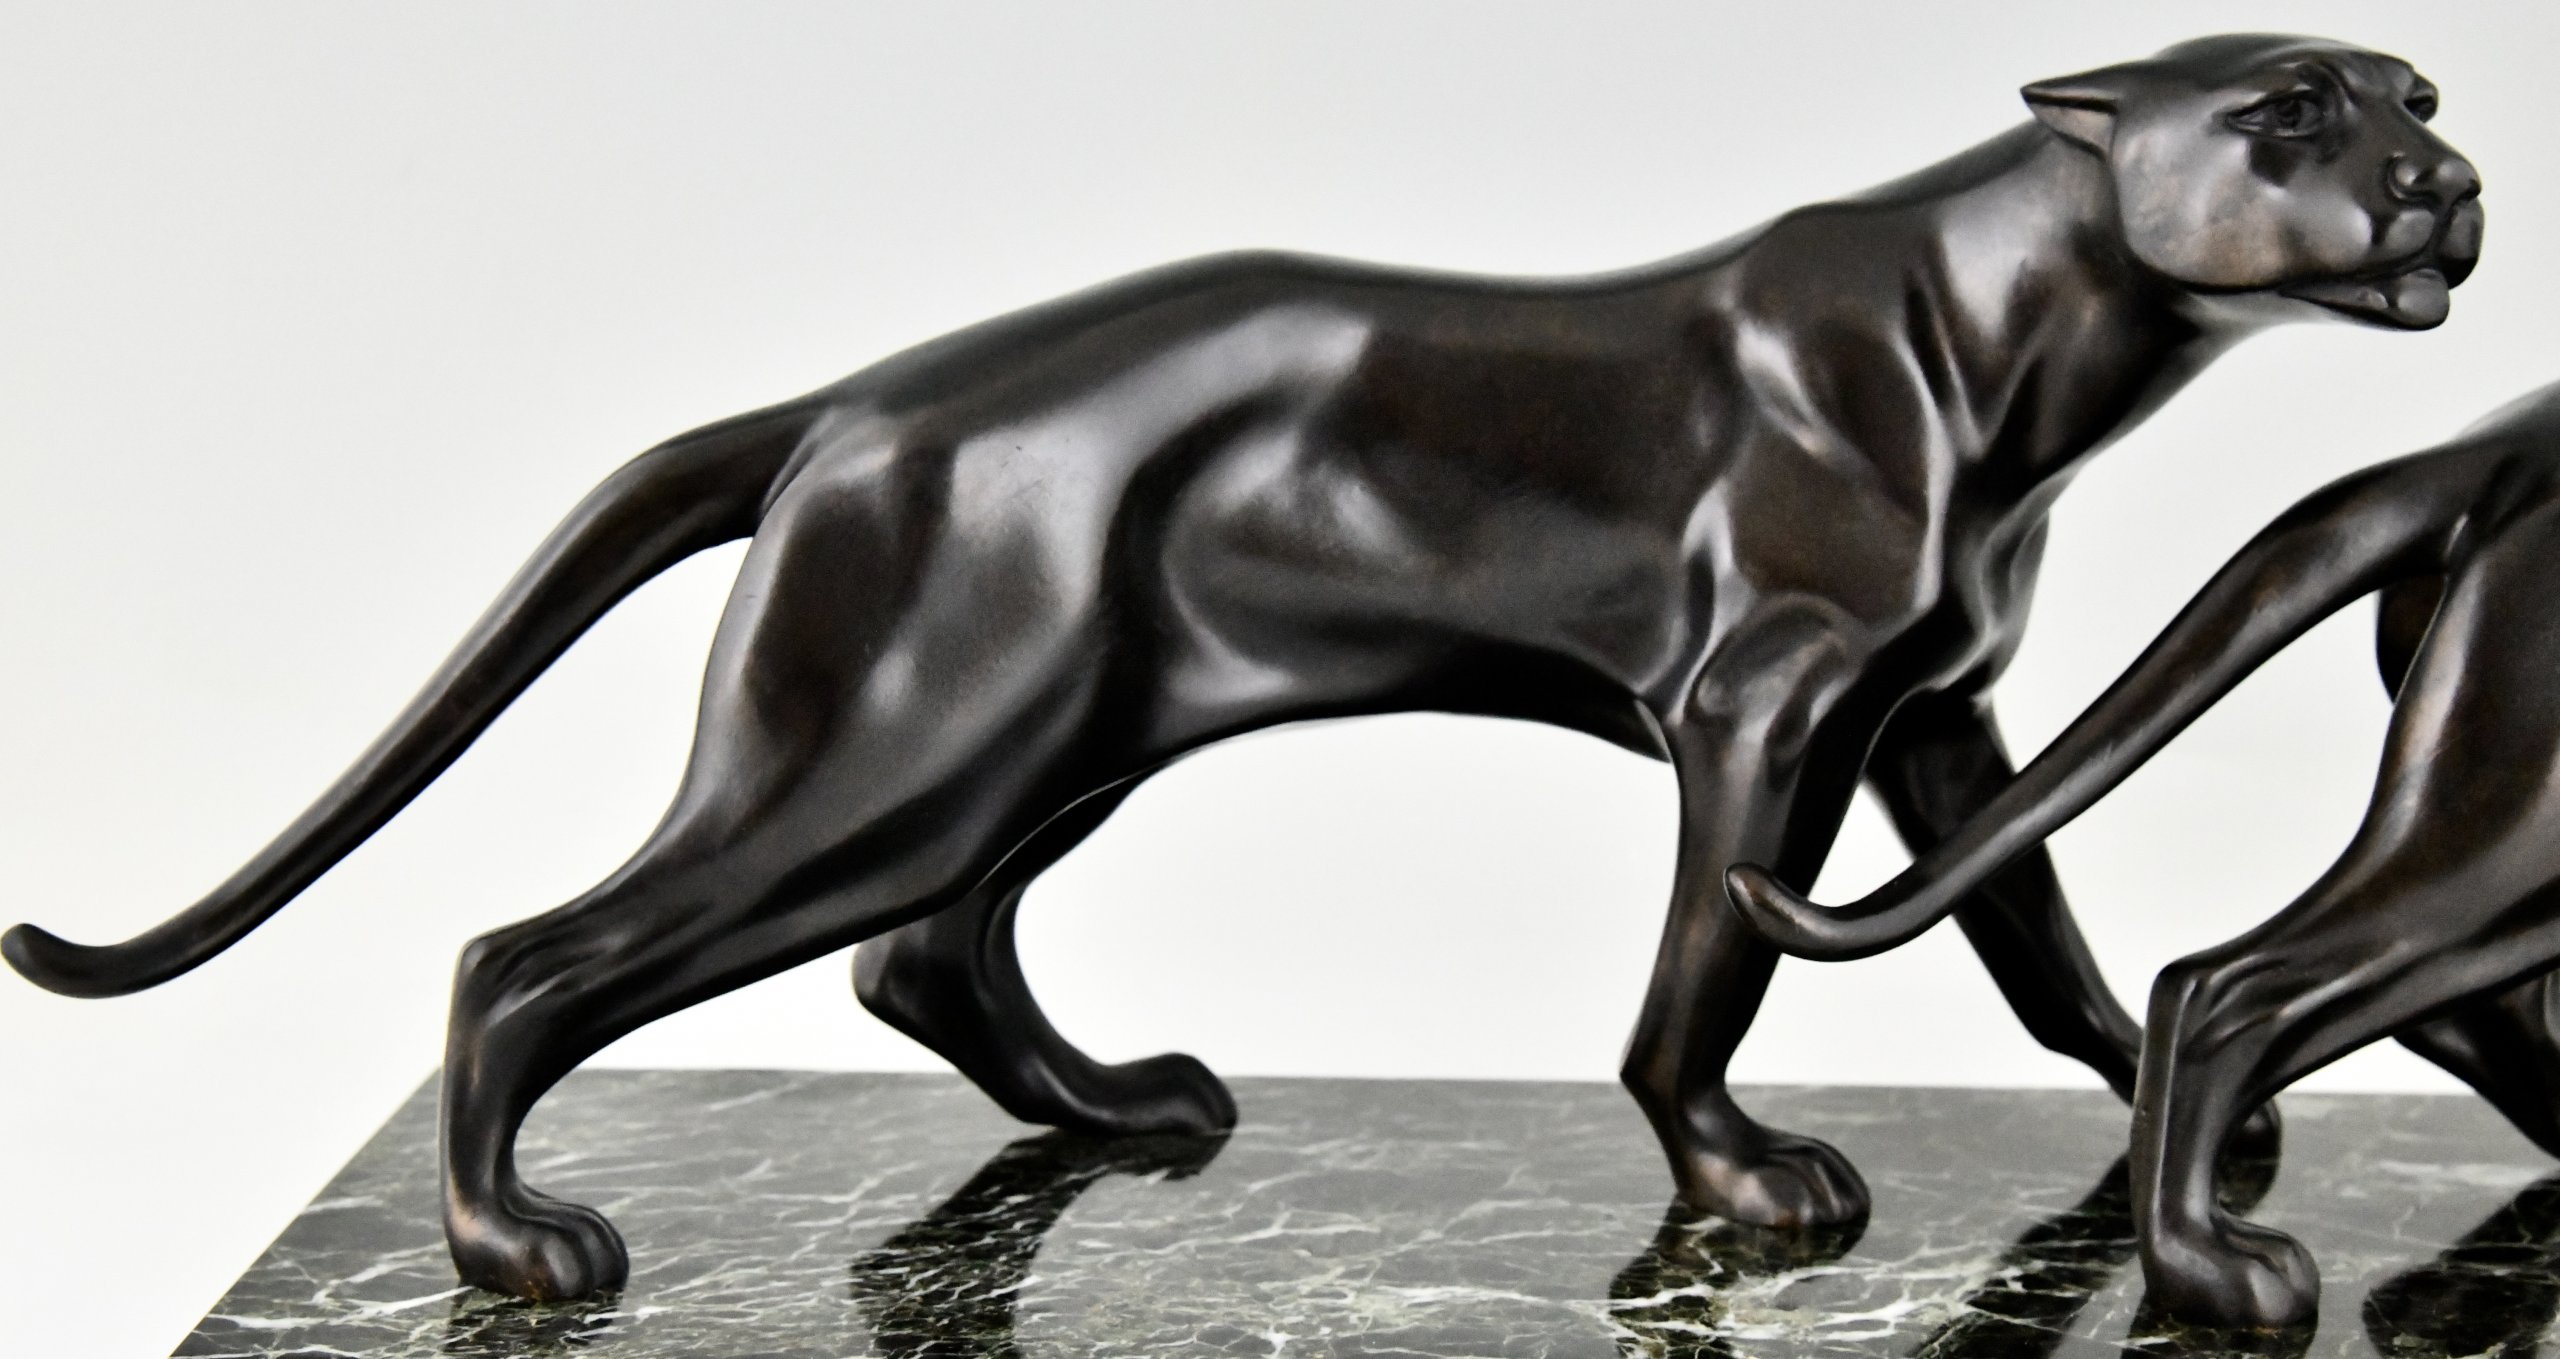 Art Deco Bronzeskulptur zwei Panther